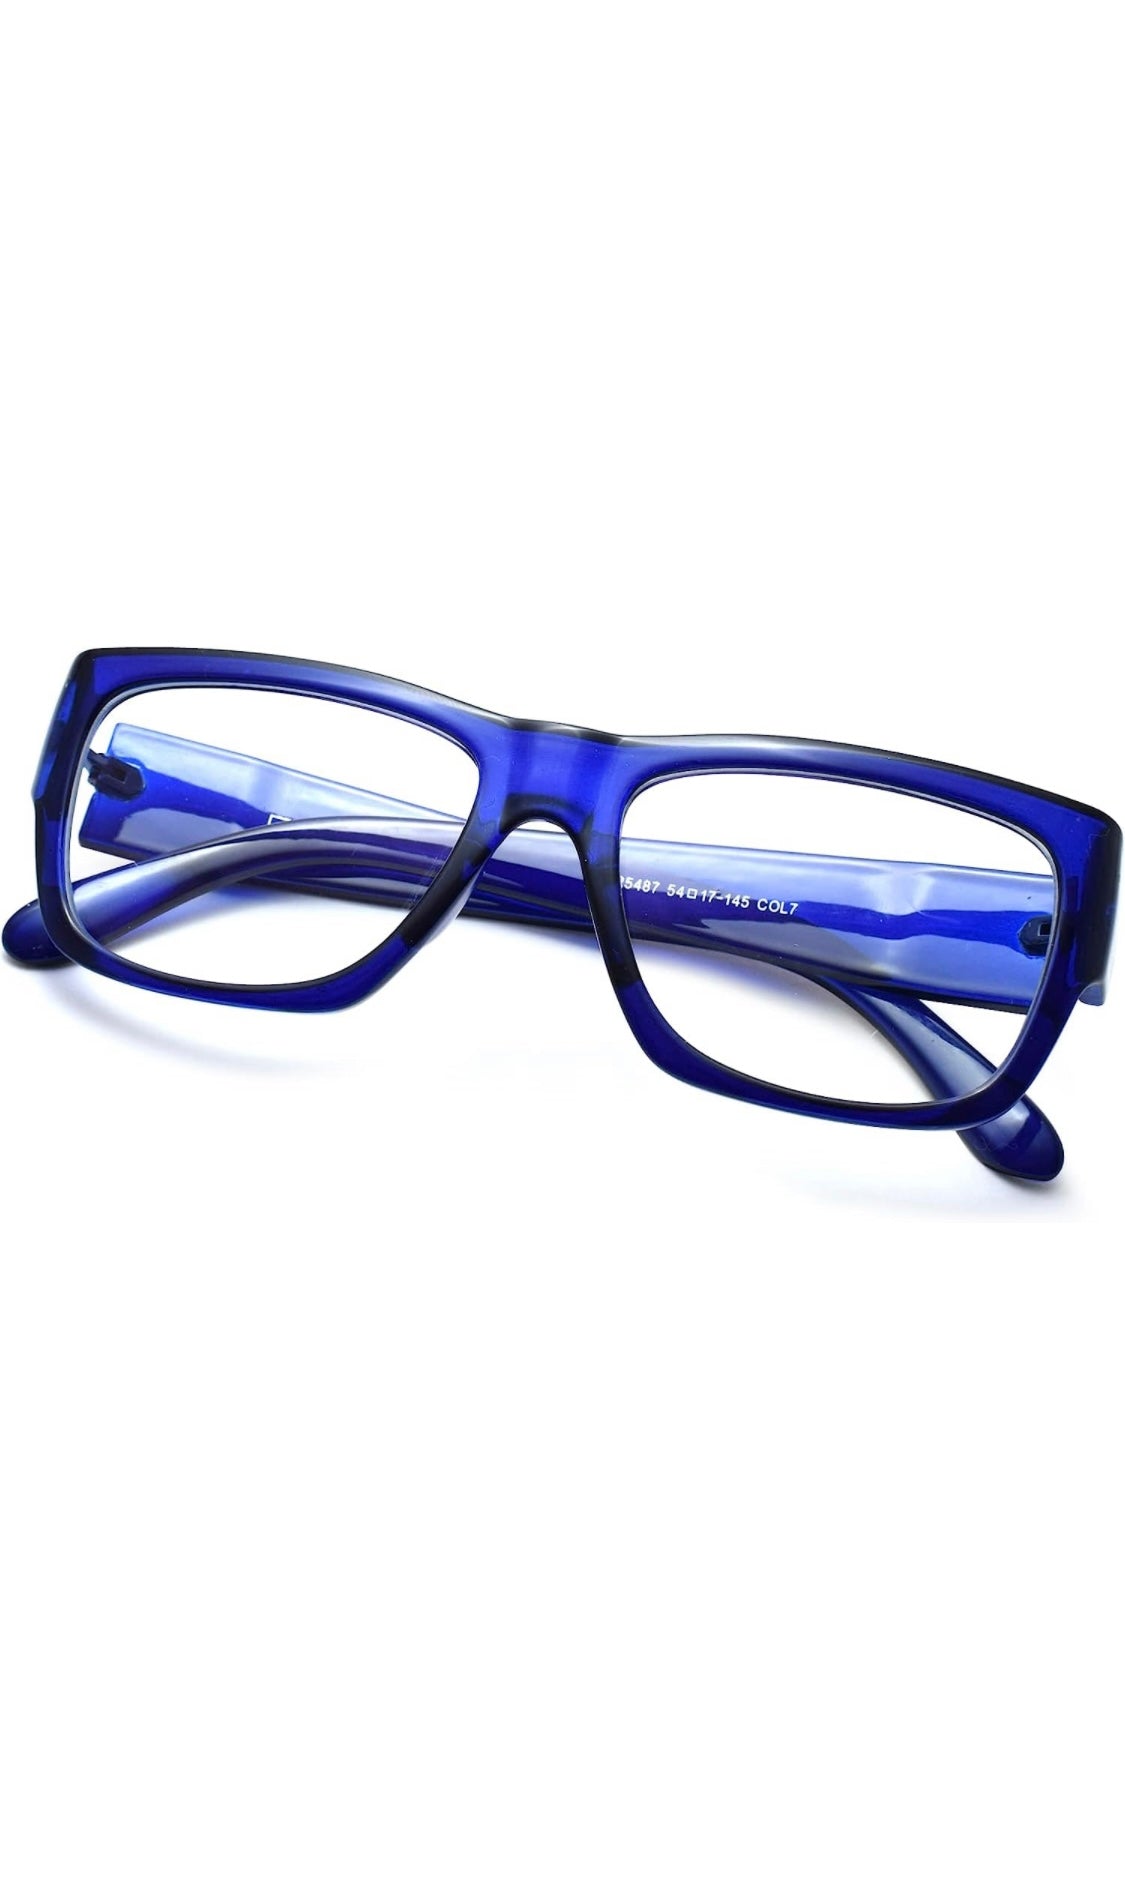 Jodykoes Thick Frame Unisex Anti Glare Eyeglasses Eyewear Spectacle (Blue) - Jodykoes ®